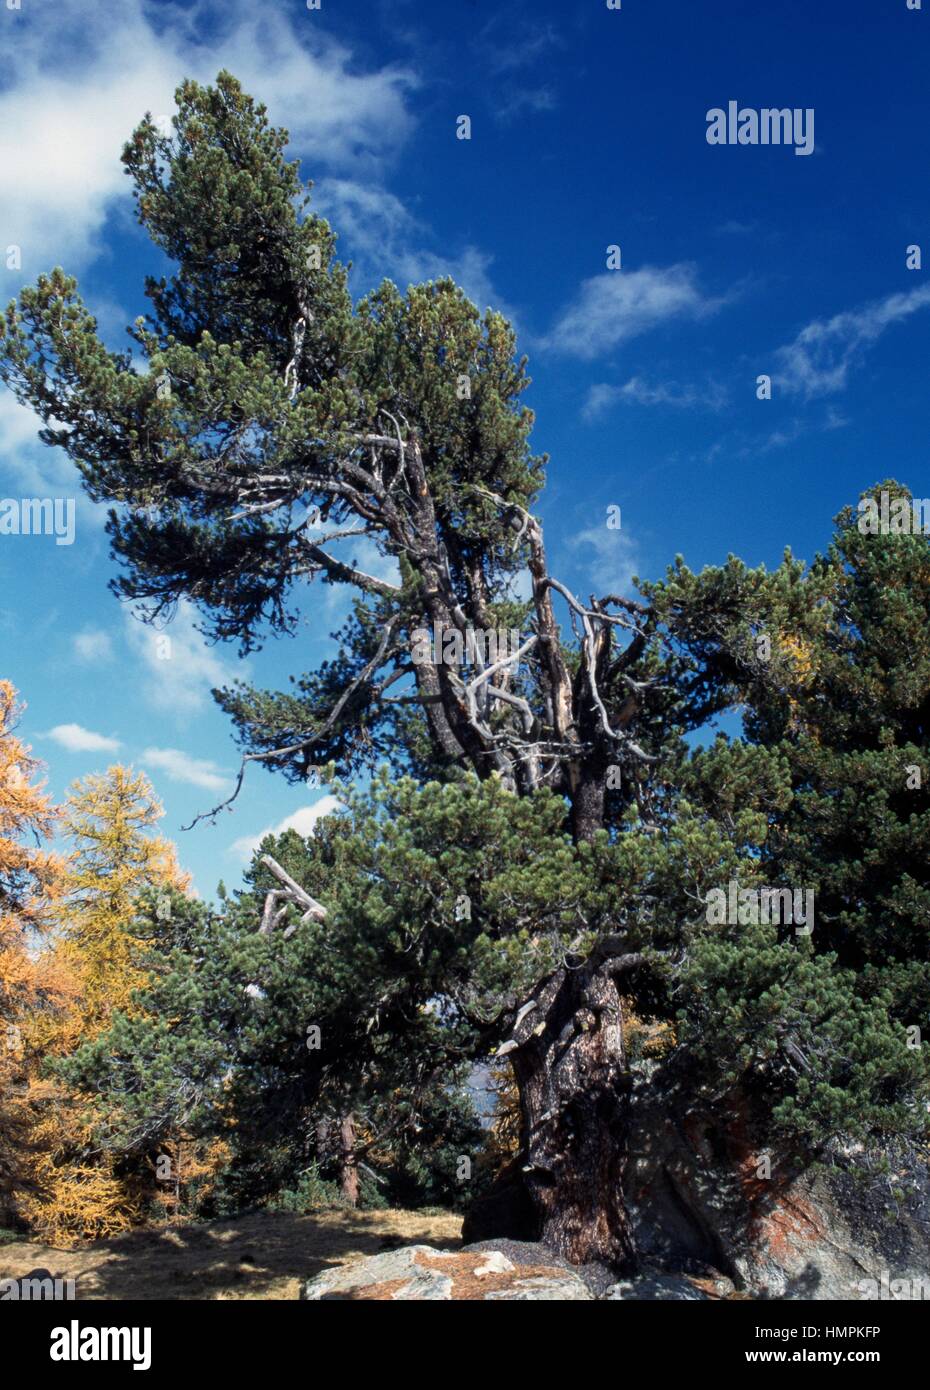 Swiss Stone Pine or Arolla Pine (Pinus cembra), Pinaceae. Stock Photo